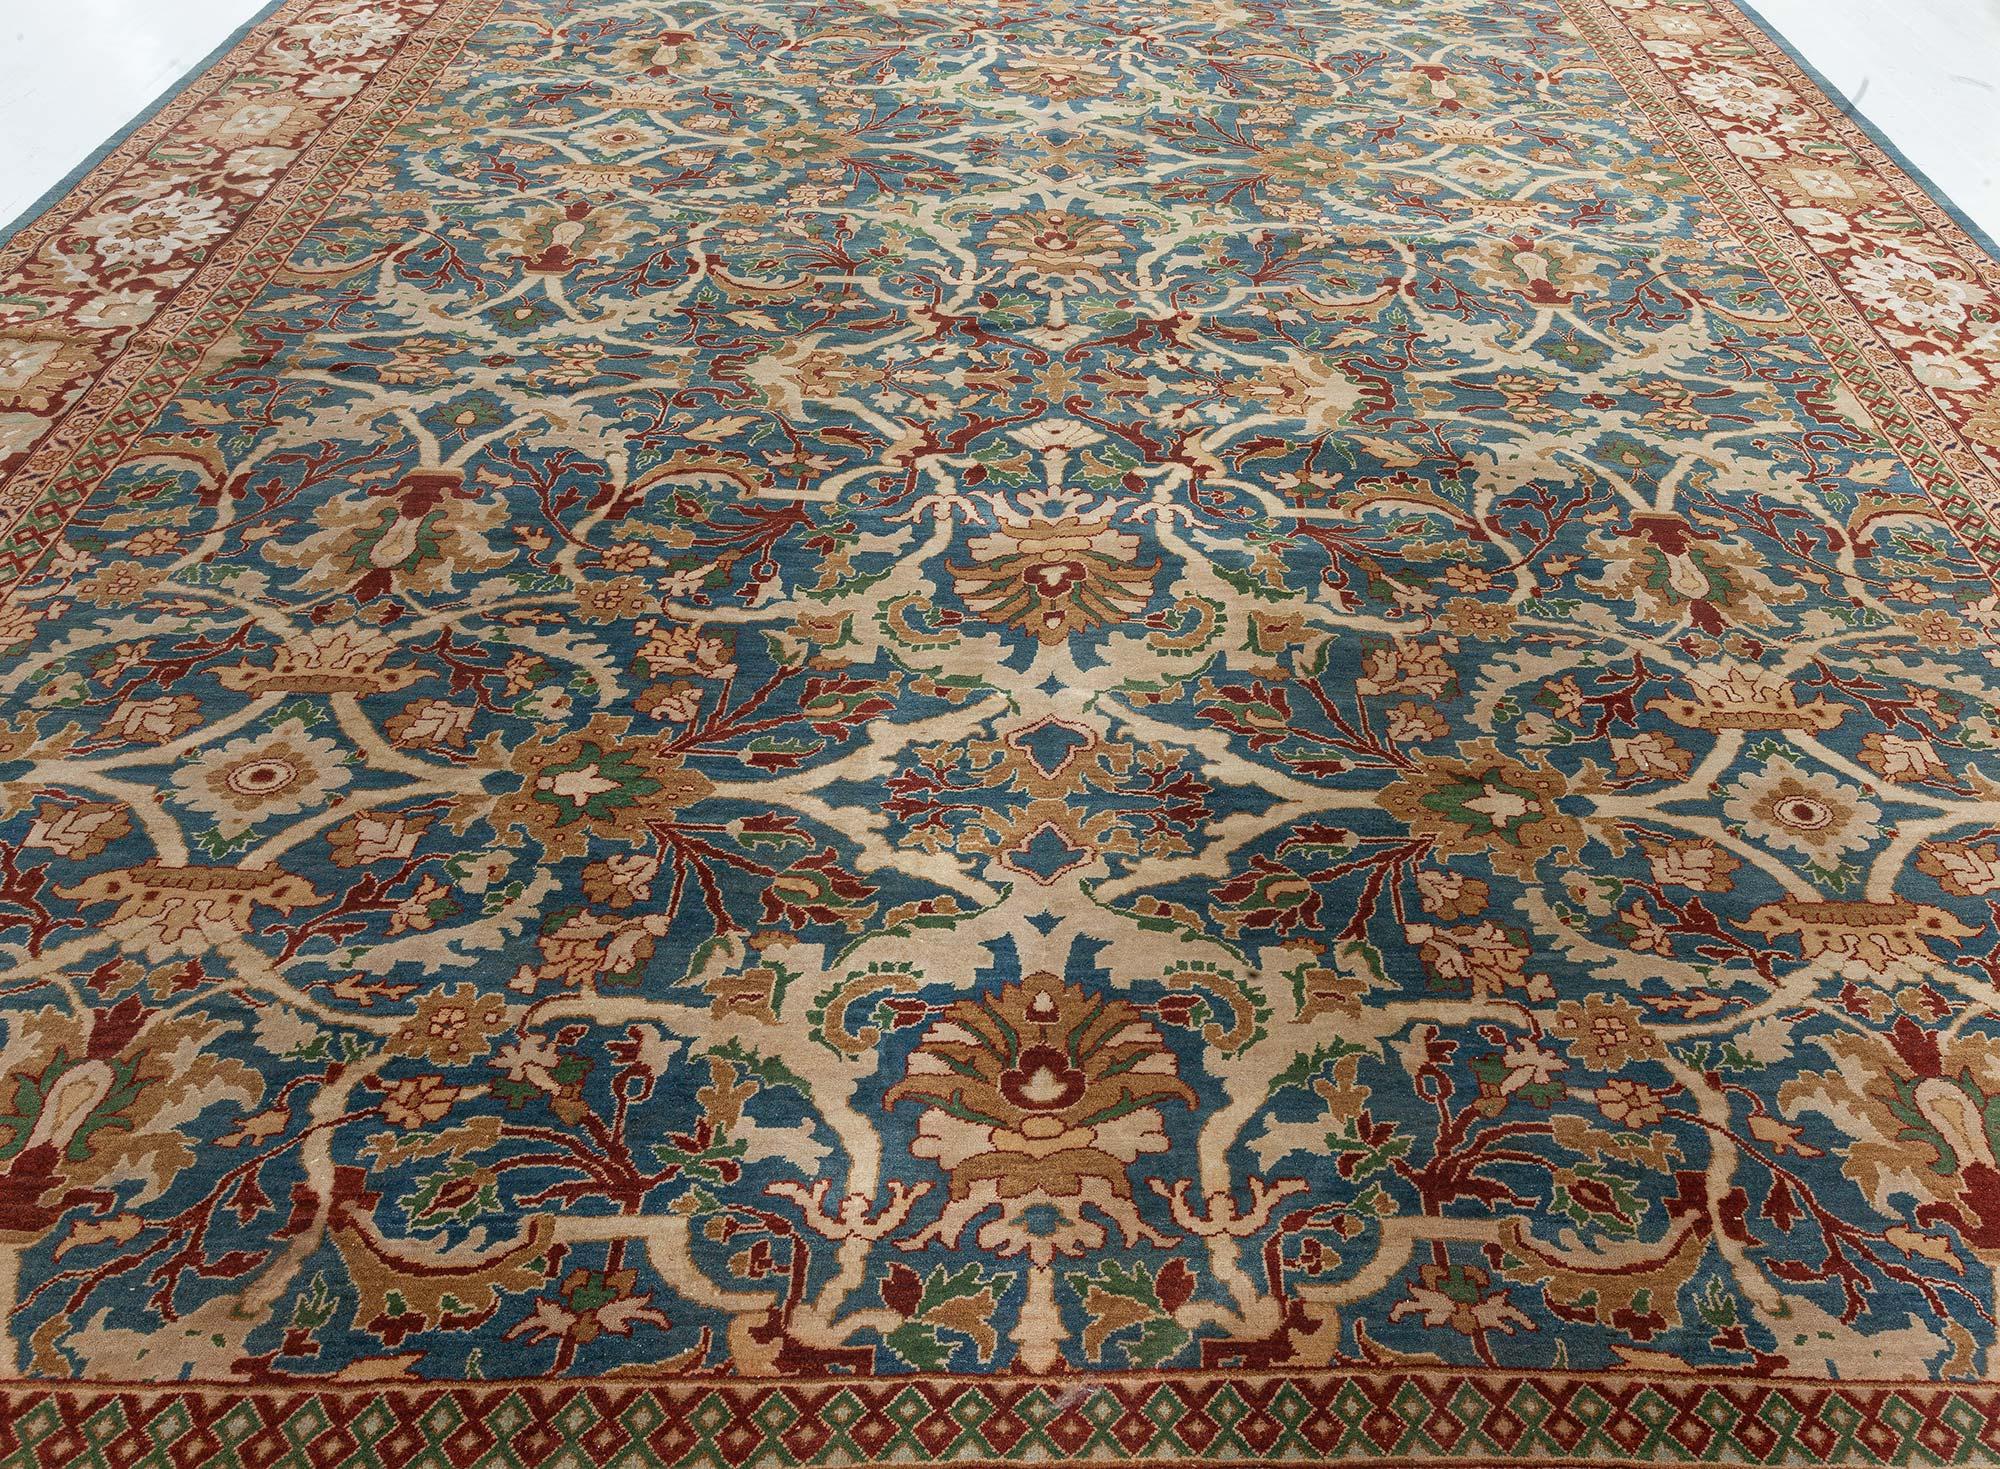 Modern Traditional Inspired Tabriz rug by Doris Leslie Blau
Size: 12'2